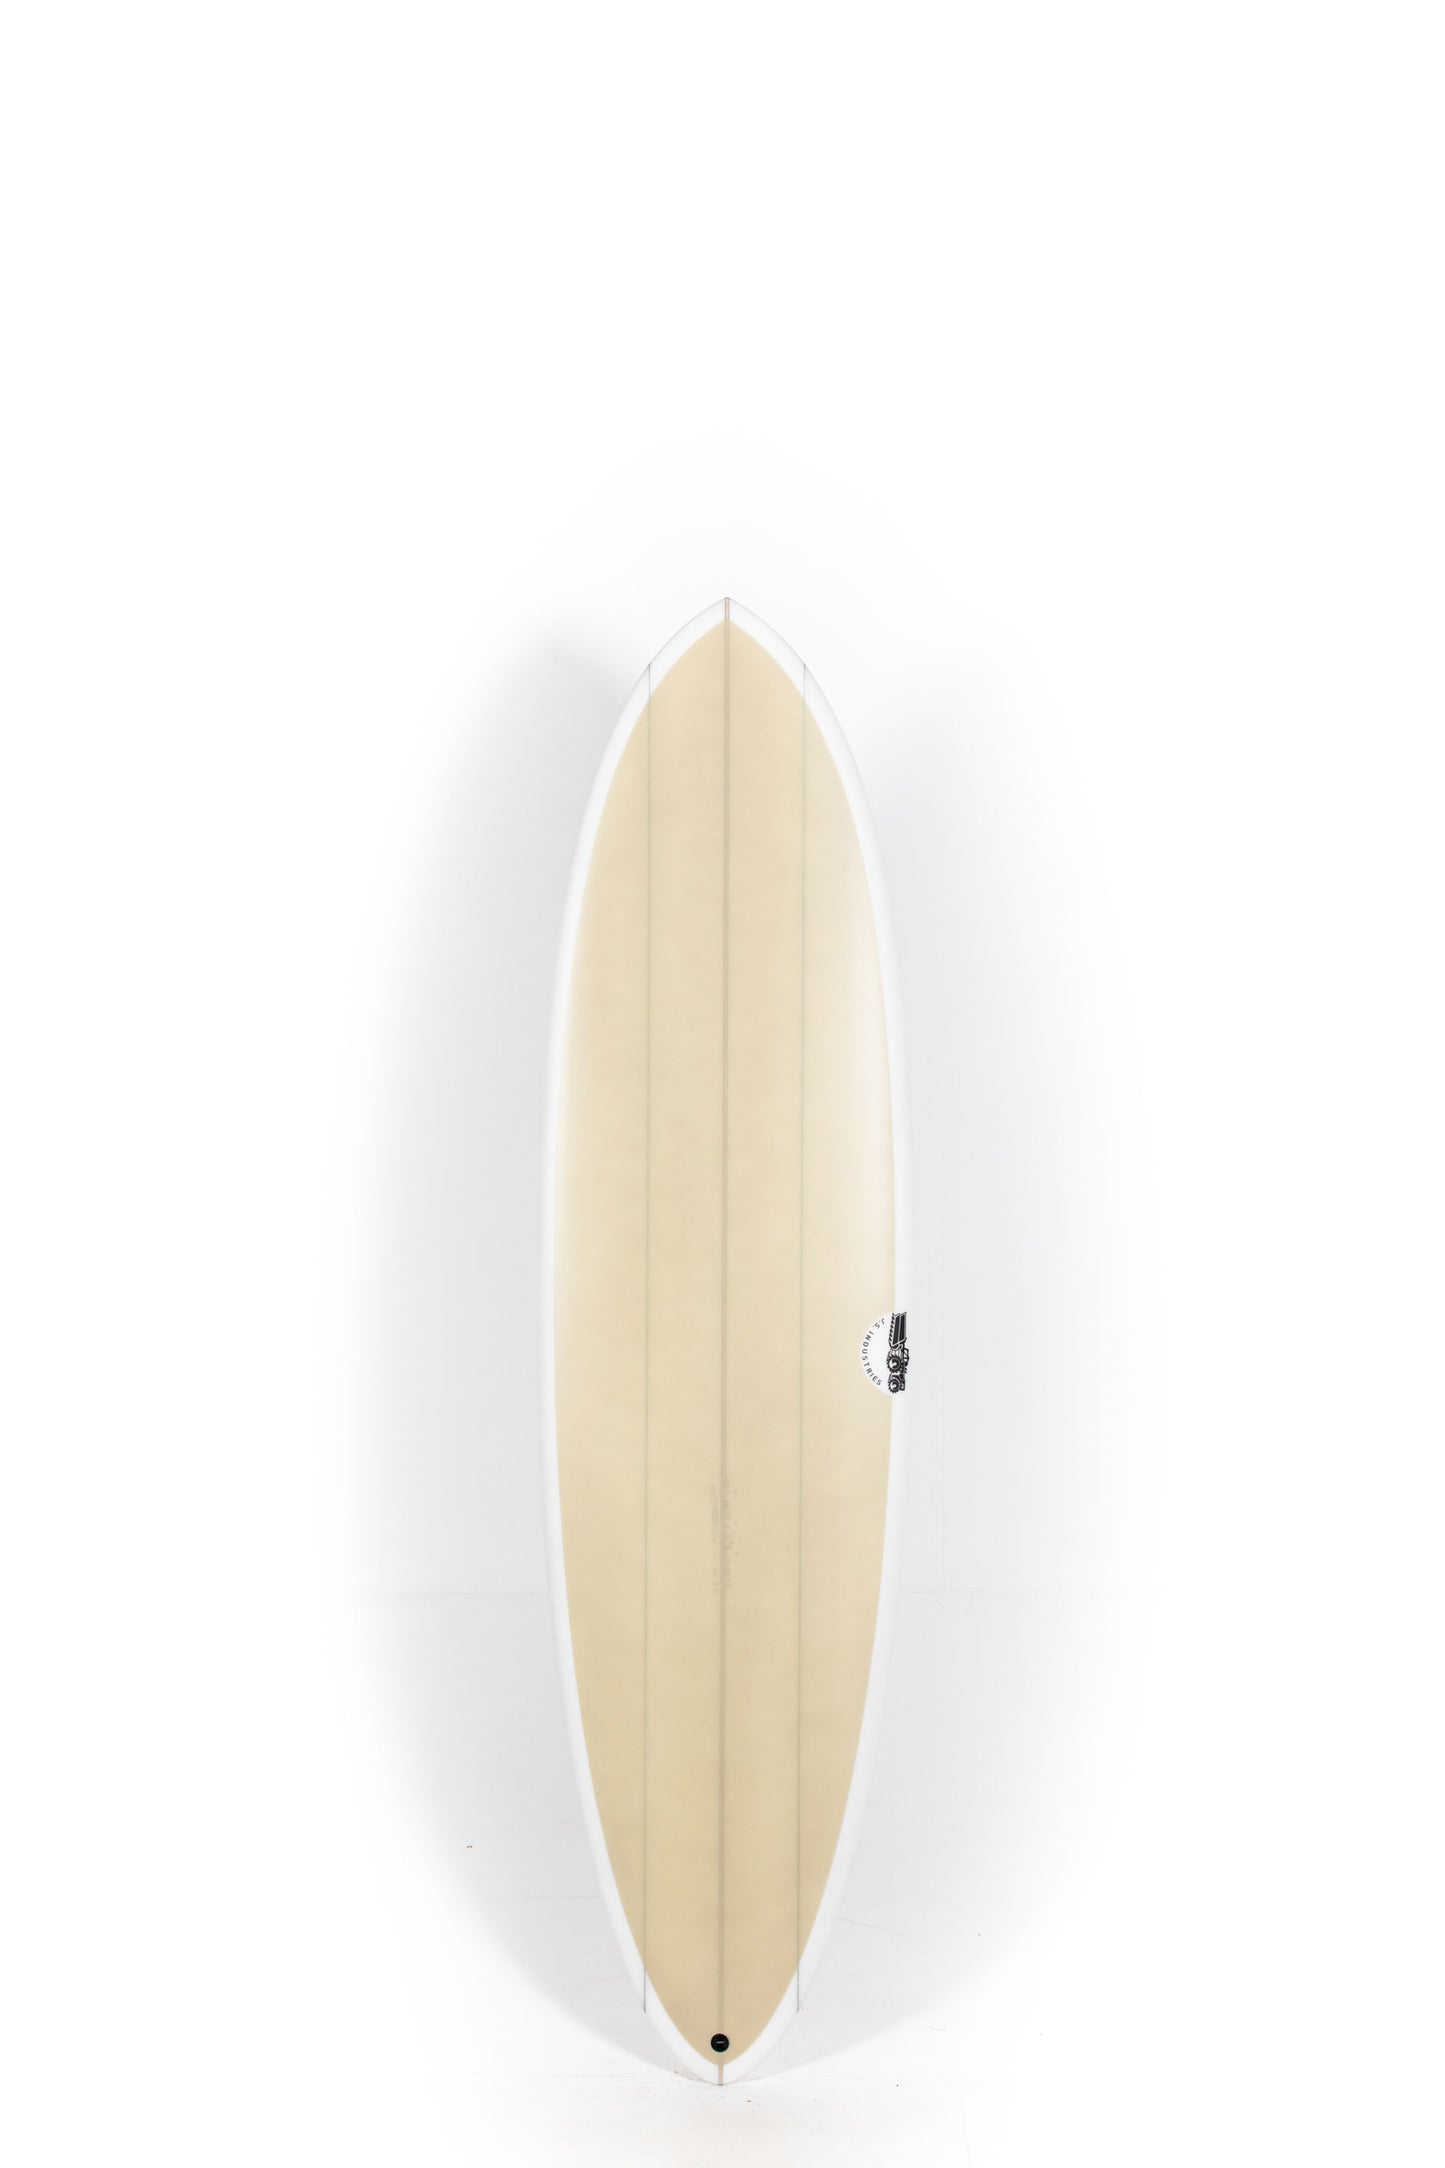 Pukas Surf Shop - JS Surfboards - BIG BARON - 6'6" x 20,25 x 2,62 x 36,8L. - BIGBARONTAN